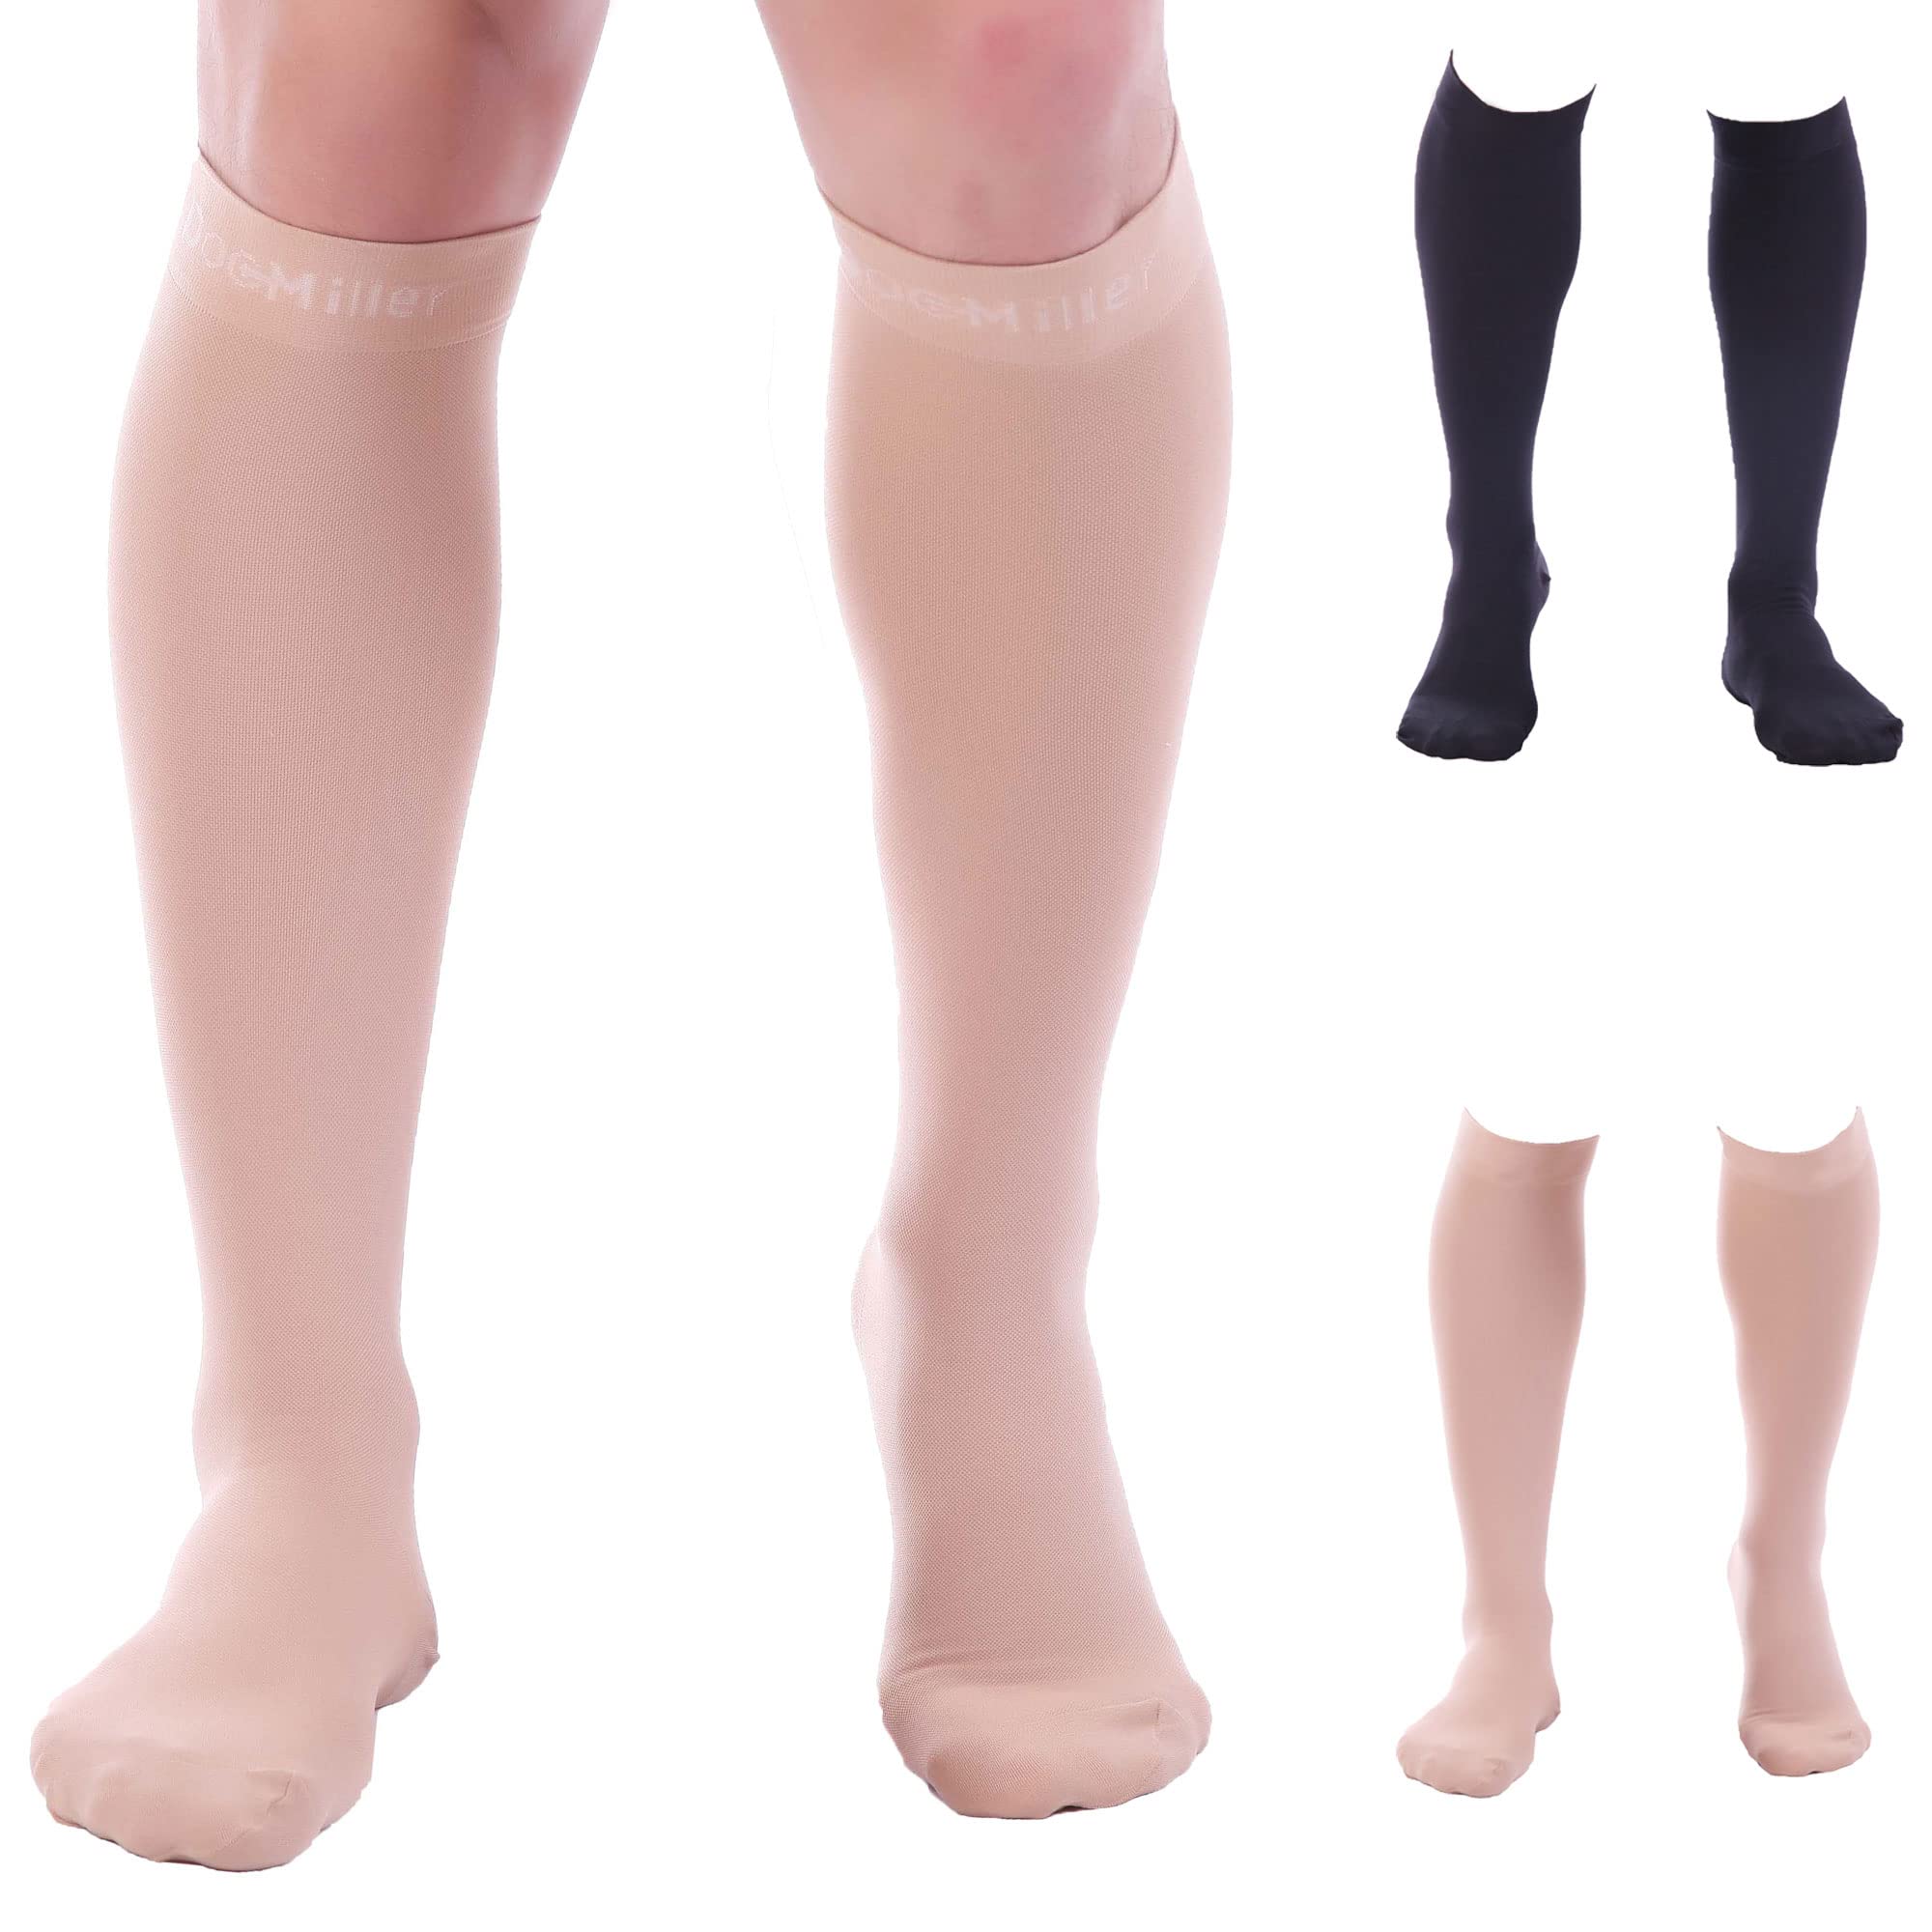 Doc Miller Thigh High Calf Compression Hose 20-30 mmHg Stockings